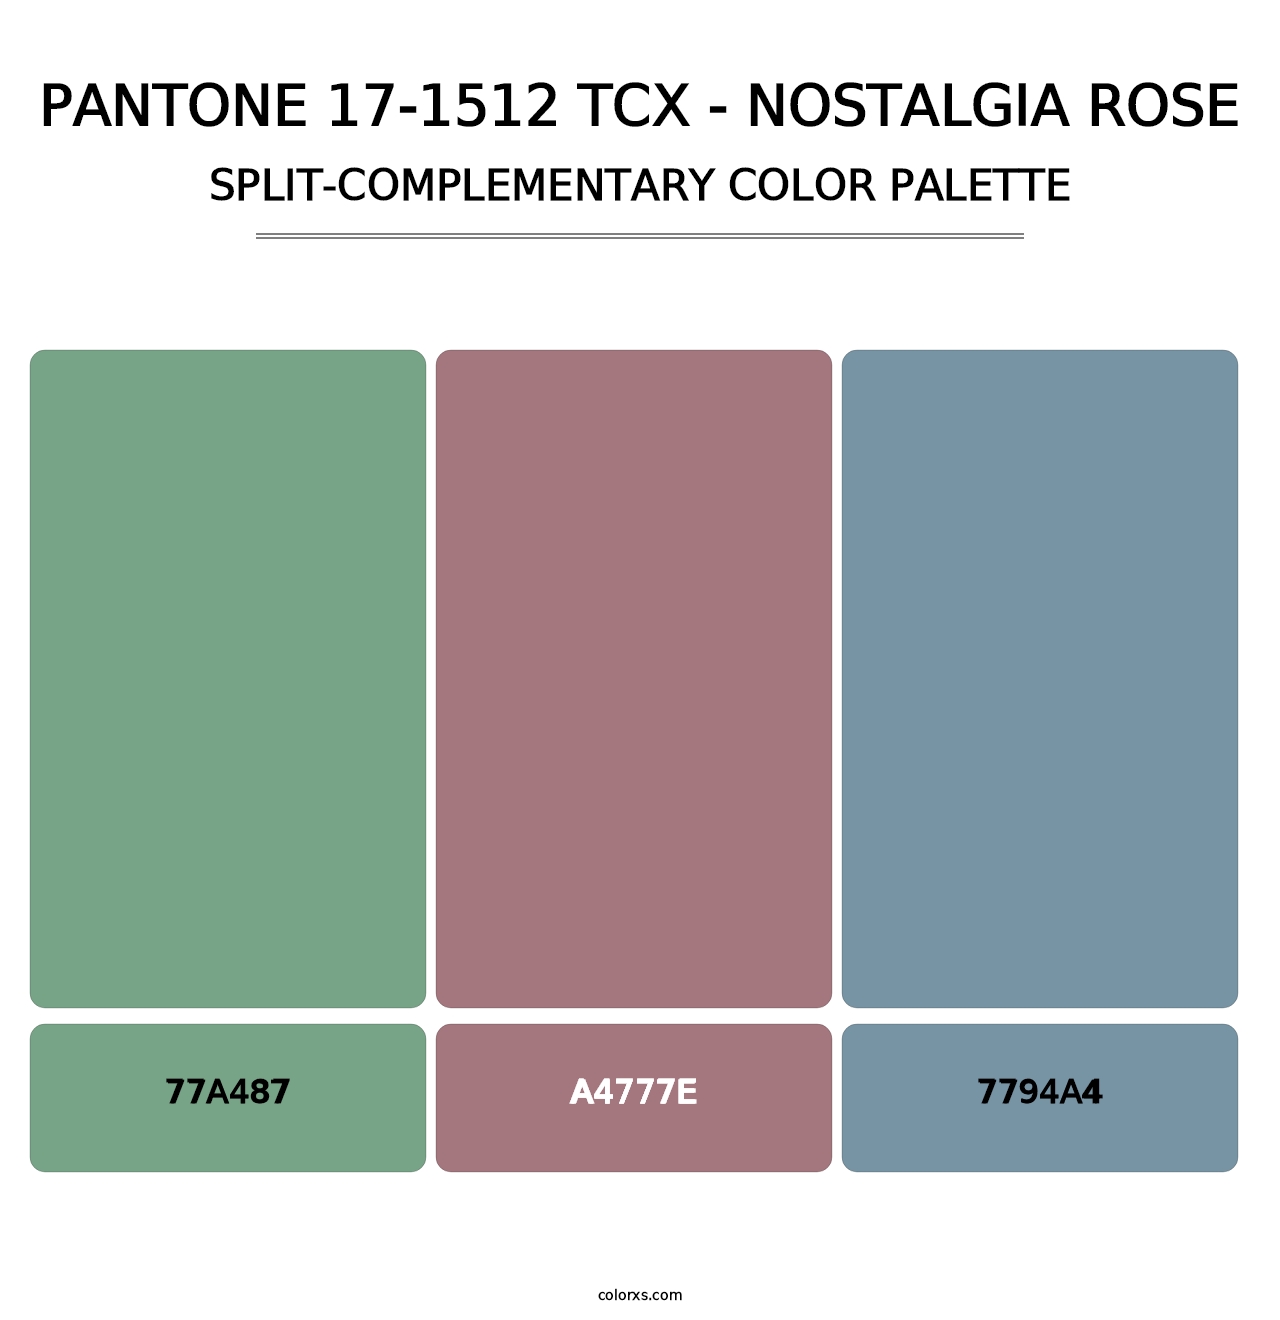 PANTONE 17-1512 TCX - Nostalgia Rose - Split-Complementary Color Palette